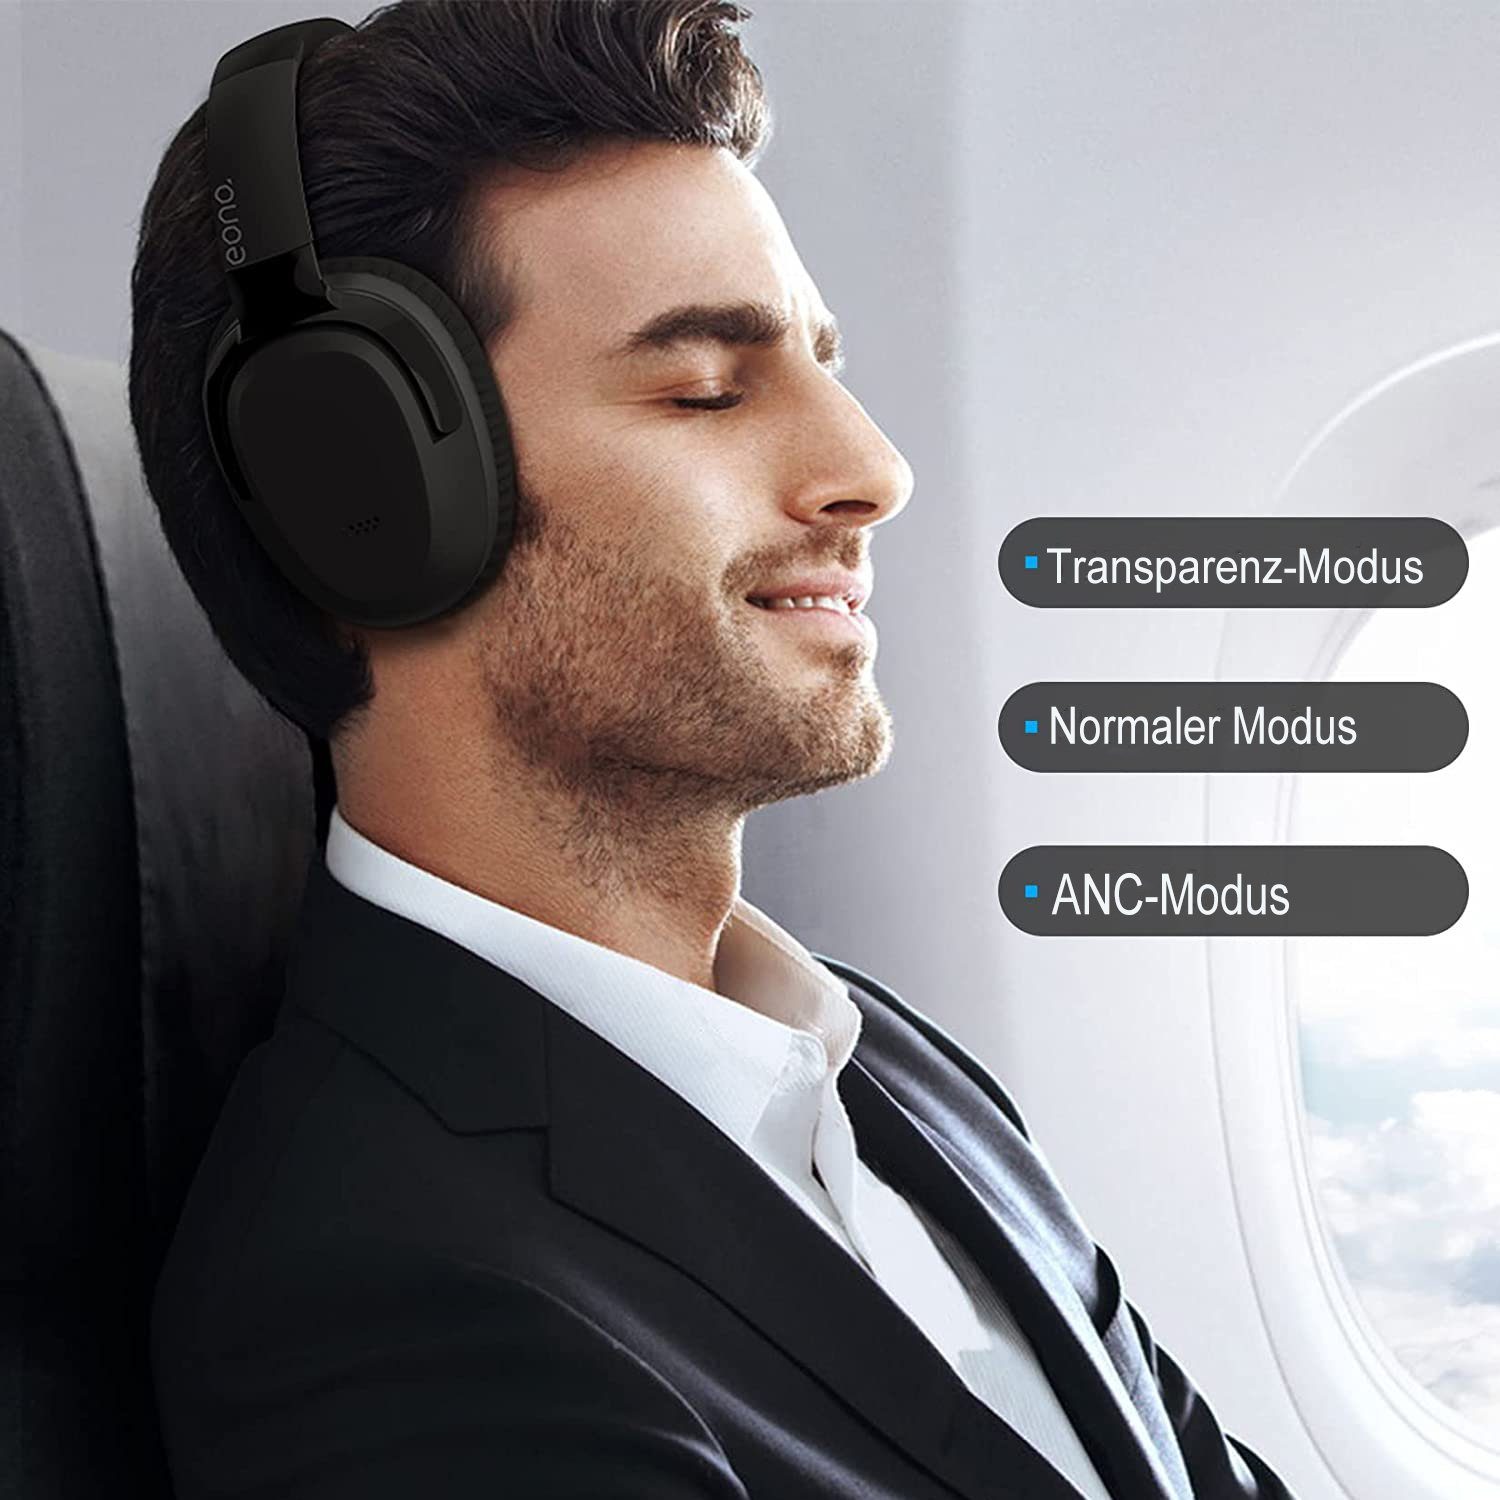 (Noise-Cancelling-Bluetooth-Kopfhörer,Hi-Res 40h für Ideal Over-Ear-Kopfhörer Multi-Modus Audio, Akku, kabellose Homeoffice, Mutoy Weiche Geräuschunterdrückung, Over-Ear-Kopfhörer,Over-Ear Kopfhörer Kopfhörer, Ohrpolster, Reisen) Bluetooth